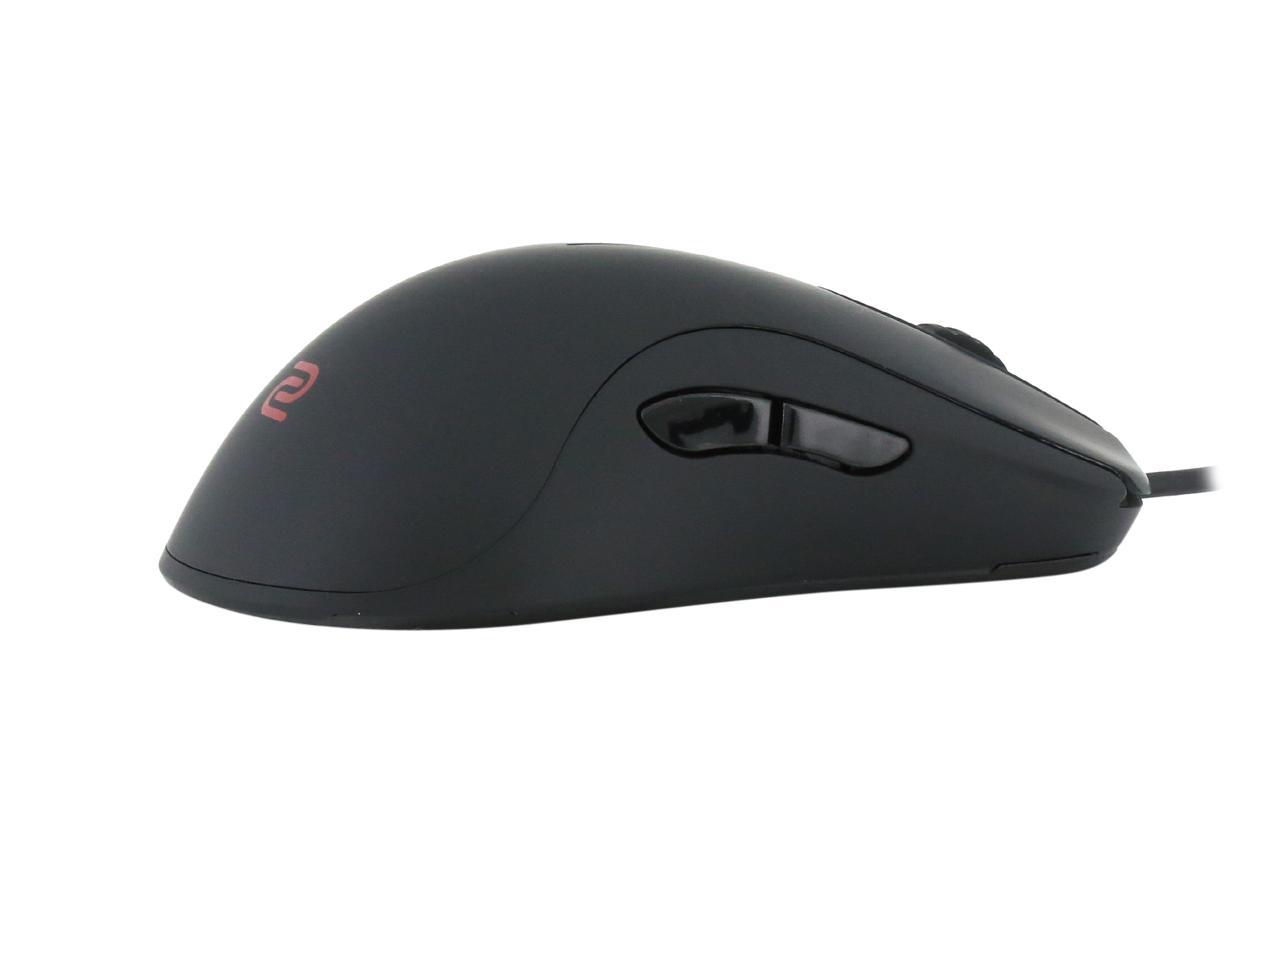 BenQ ZOWIE ZA12 Gaming Mouse, Medium Ambidextrous High Profile Design